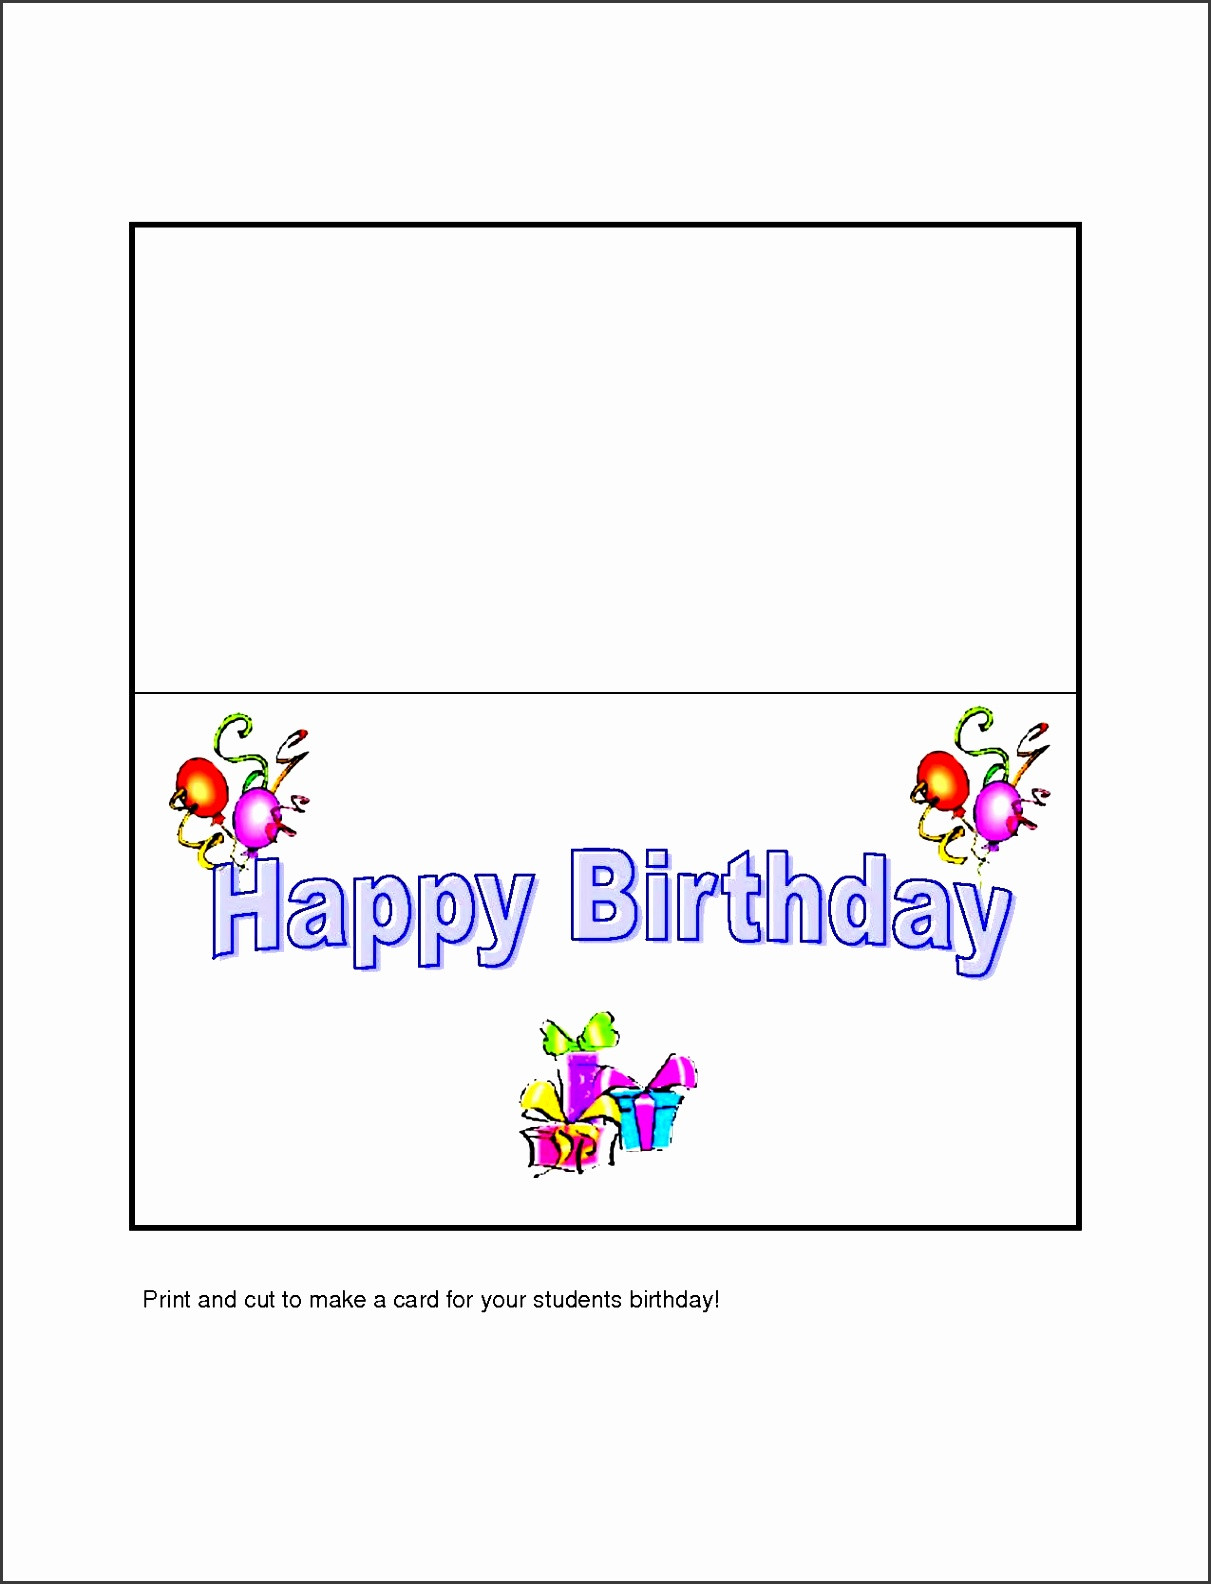 Microsoft Word Birthday Card Template
 10 Free Microsoft Word Greeting Card Templates